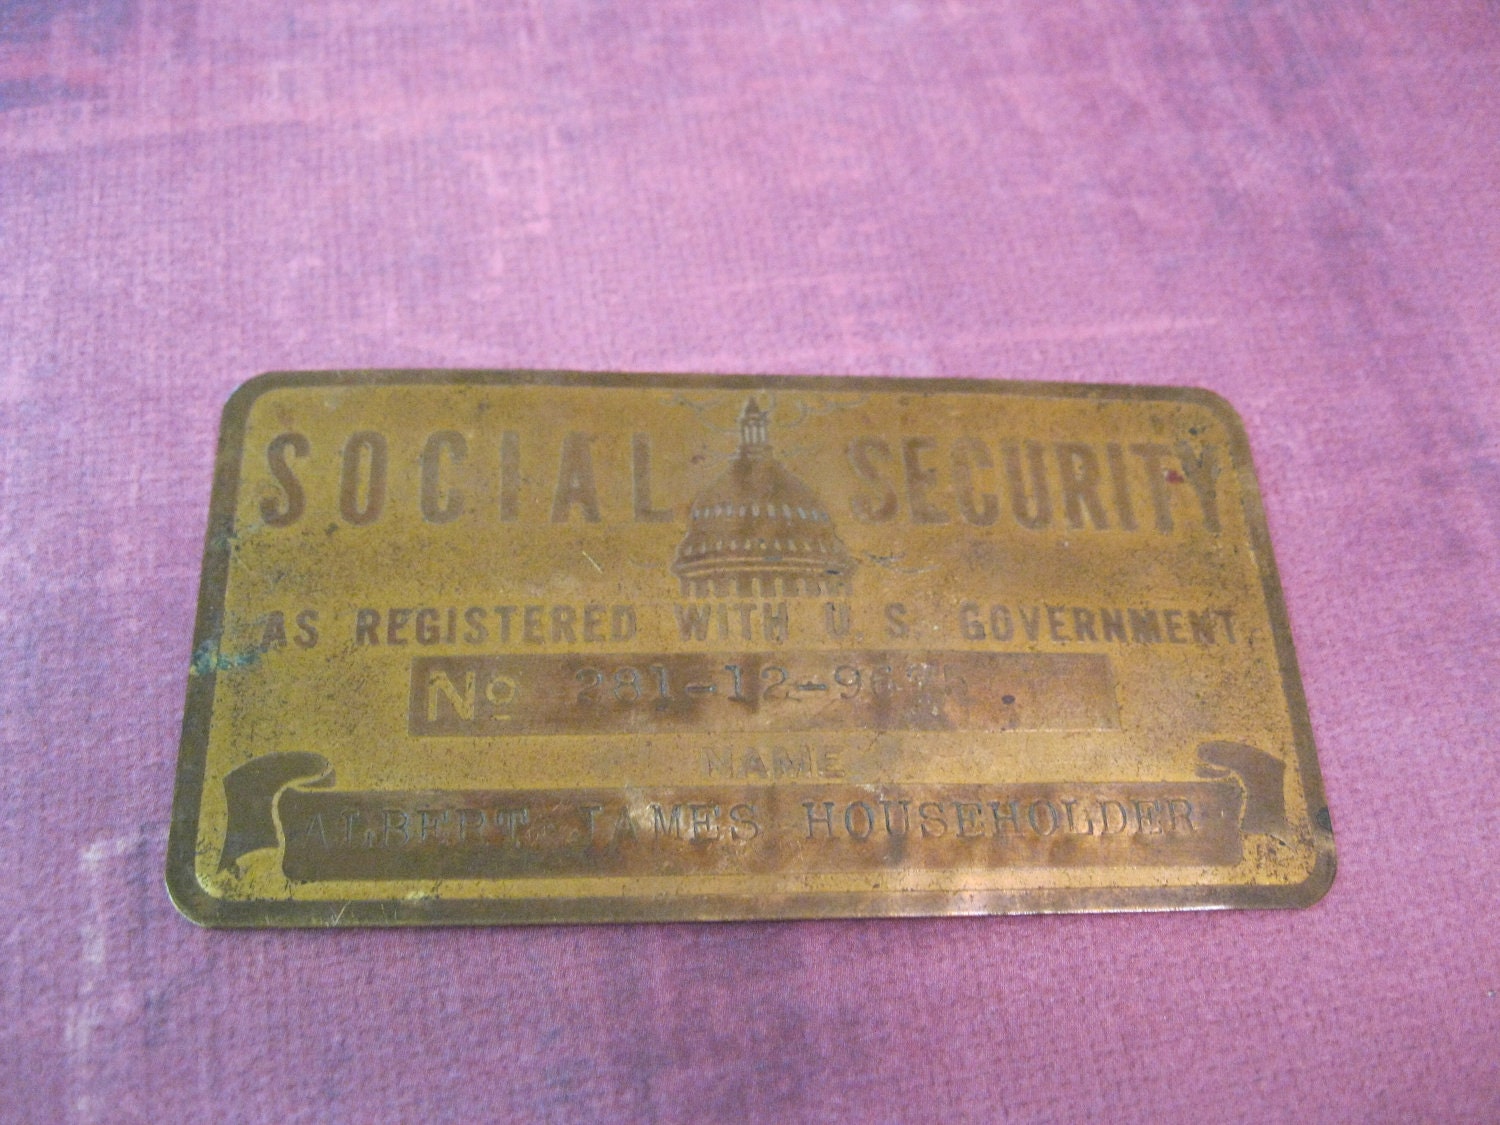 Vintage Brass Social Security Card